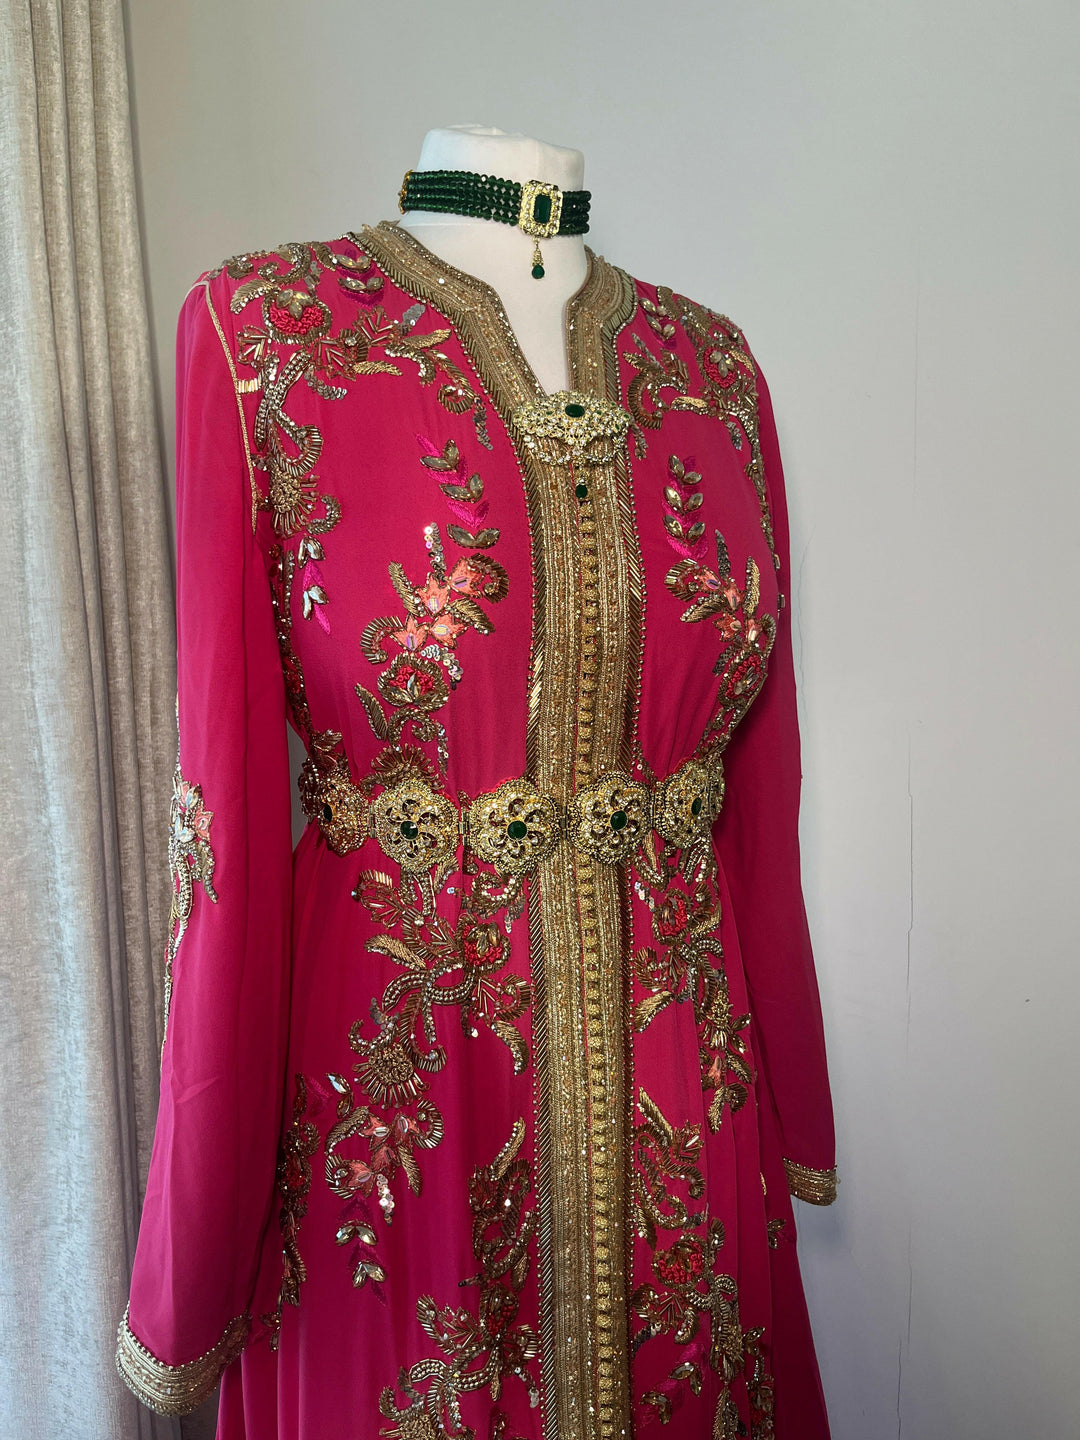 fuchsia pink lebsa caftan dress uk London worldwide shipping moroccan dress